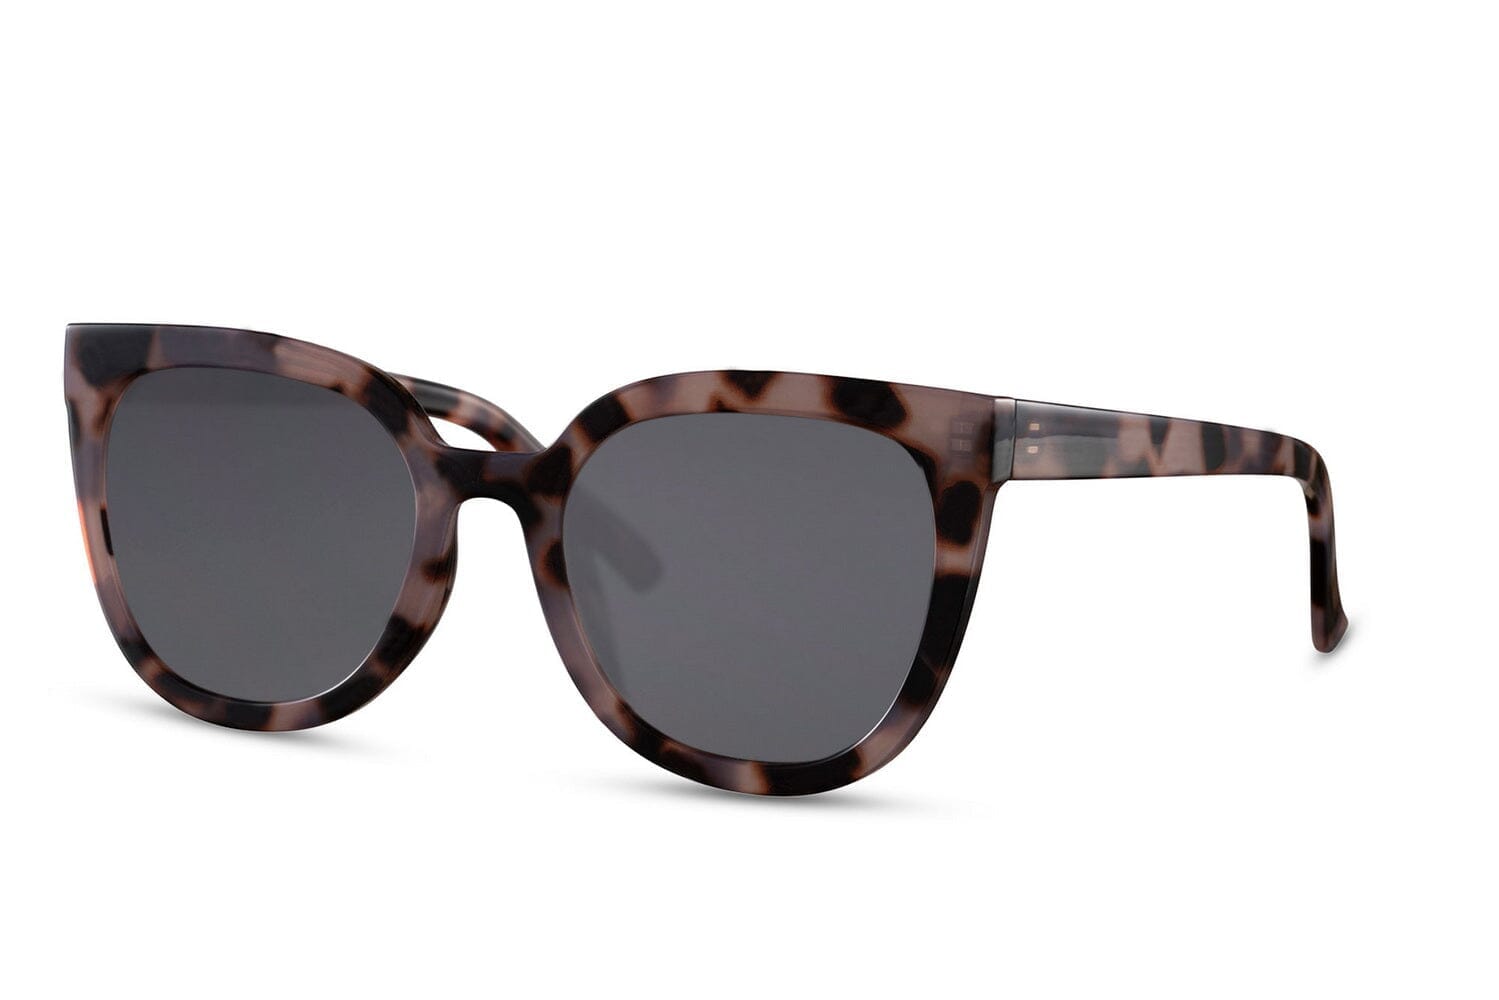 Tortoiseshell cat eye sunglasses. UV400 protected. 